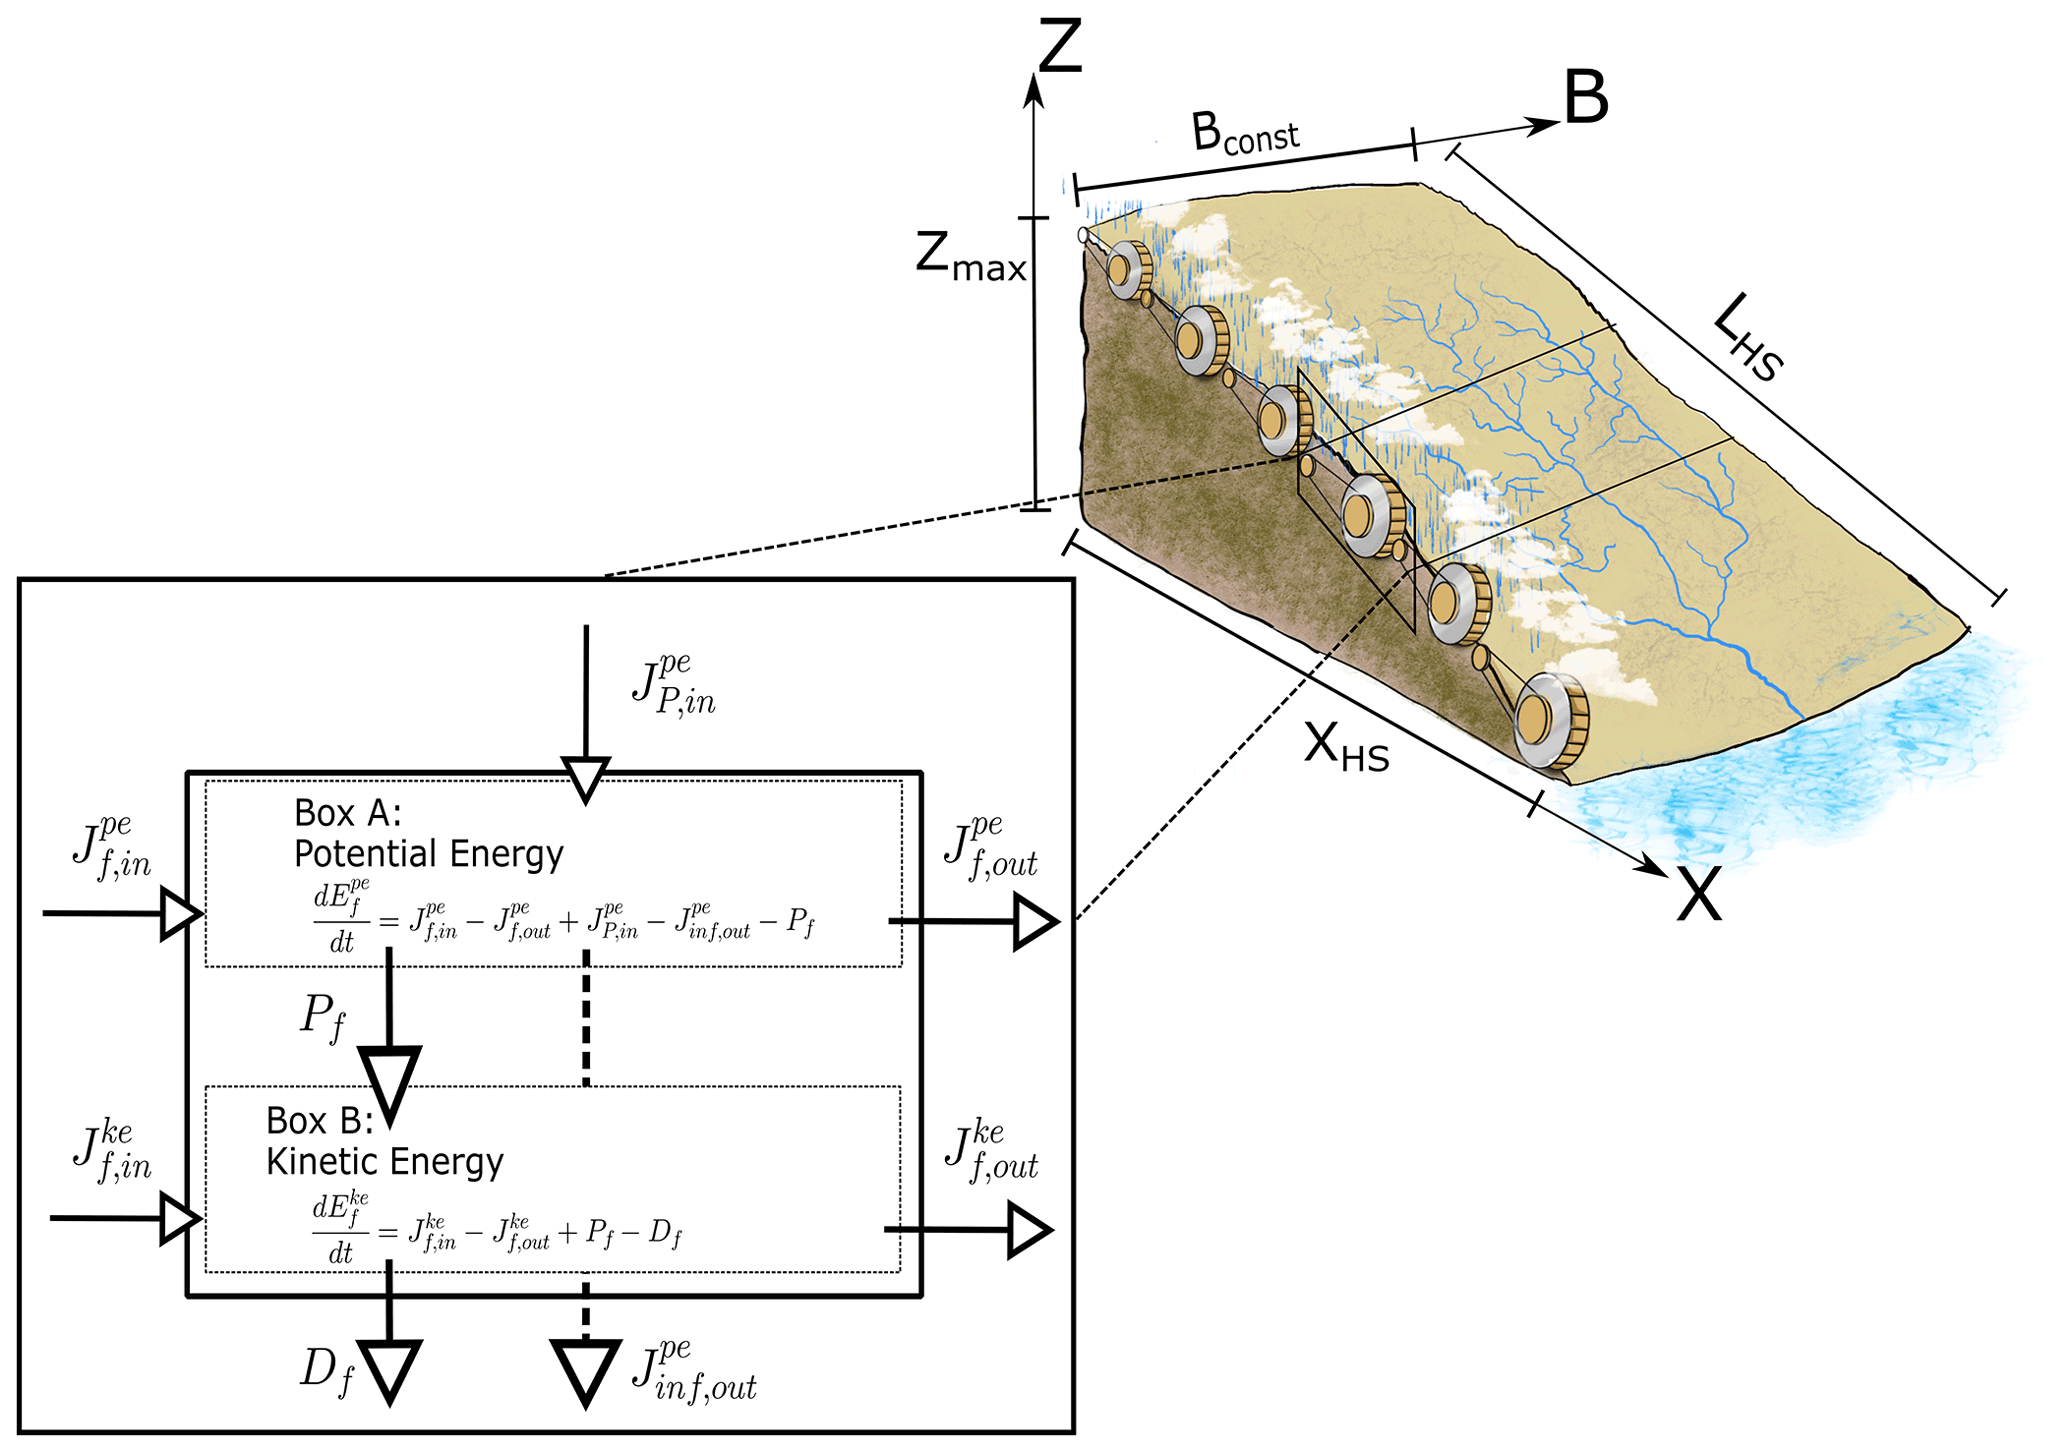 HESS - Morphological controls on surface runoff: an interpretation 